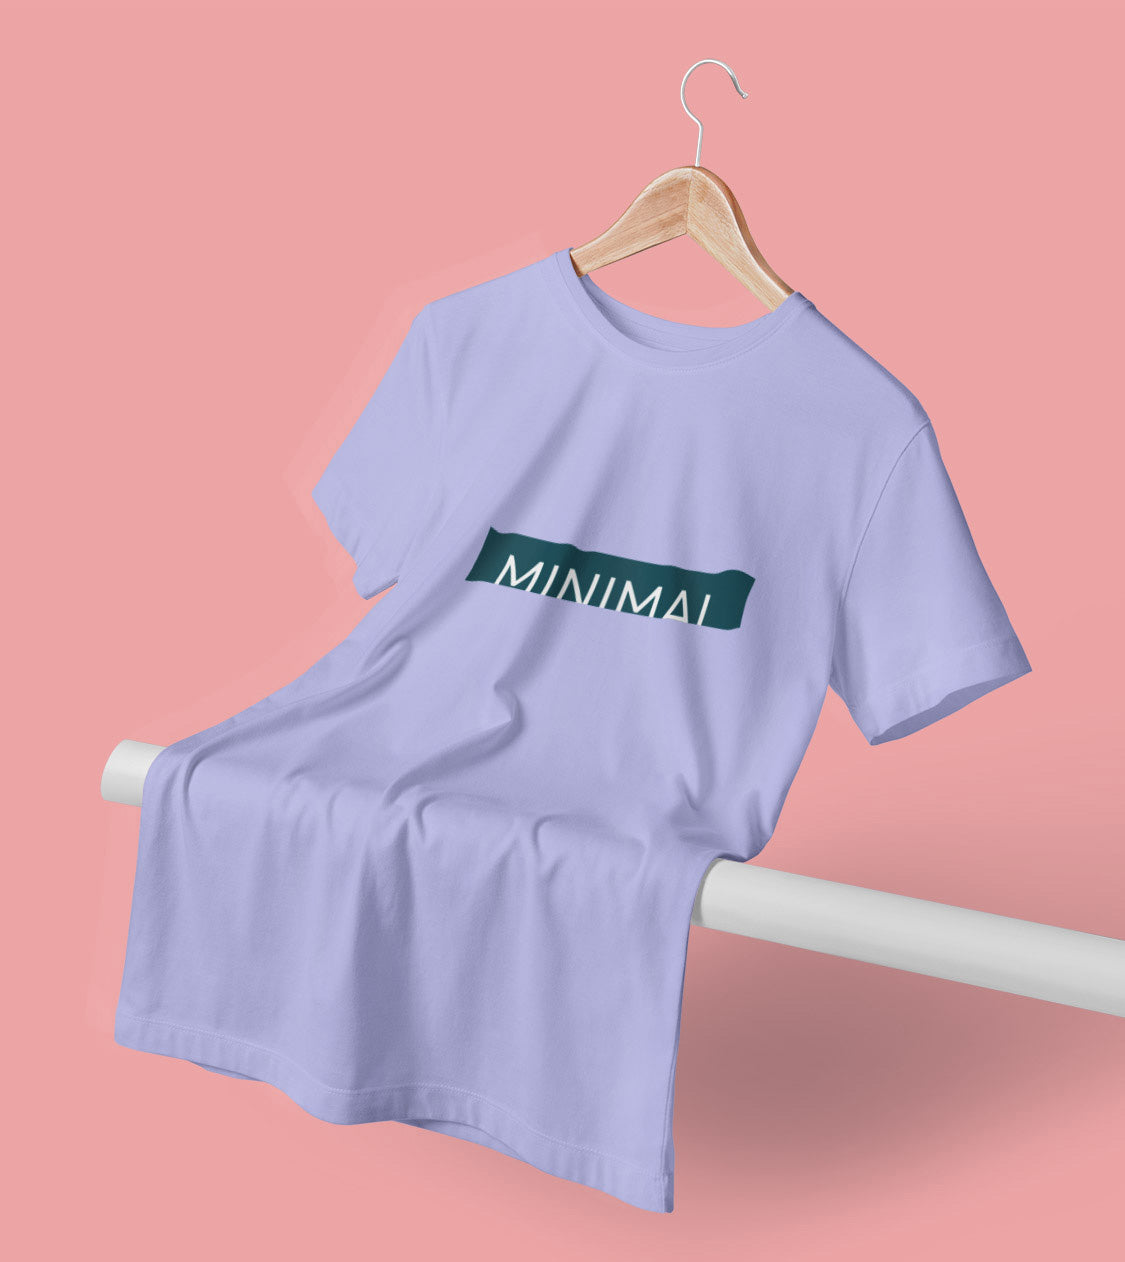 minimal printed lavender t shirt for men